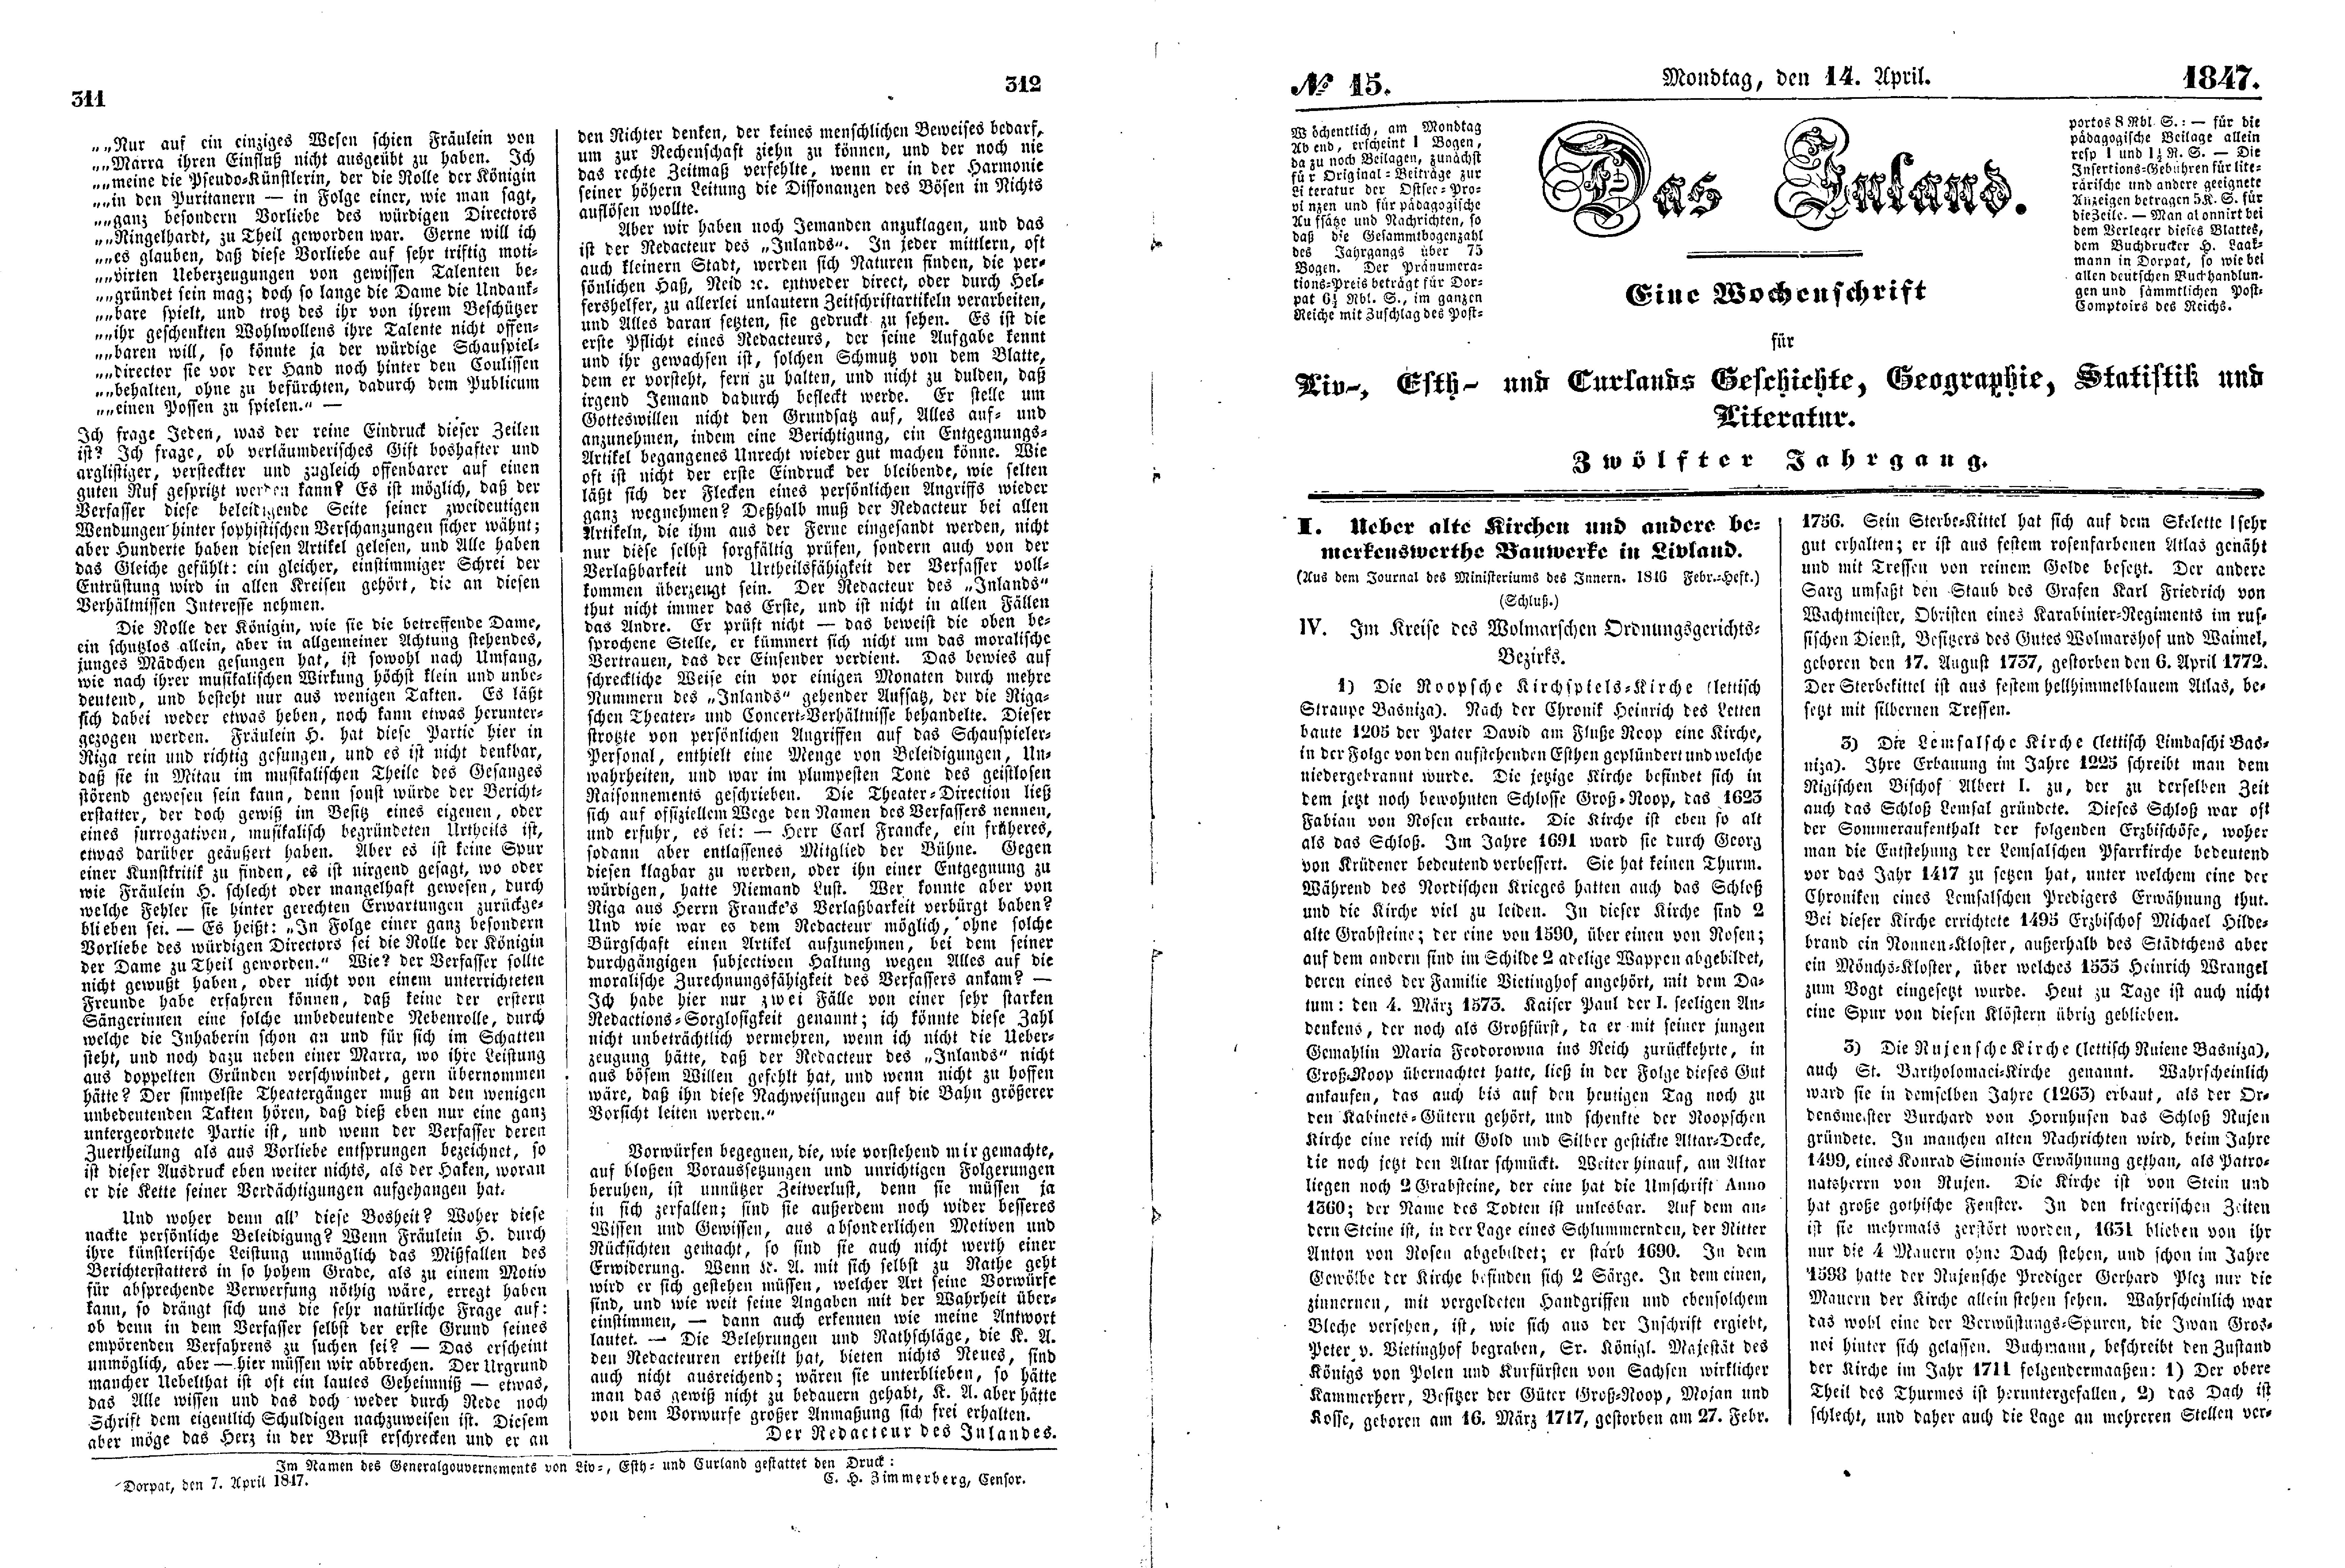 Das Inland [12] (1847) | 83. (311-314) Main body of text